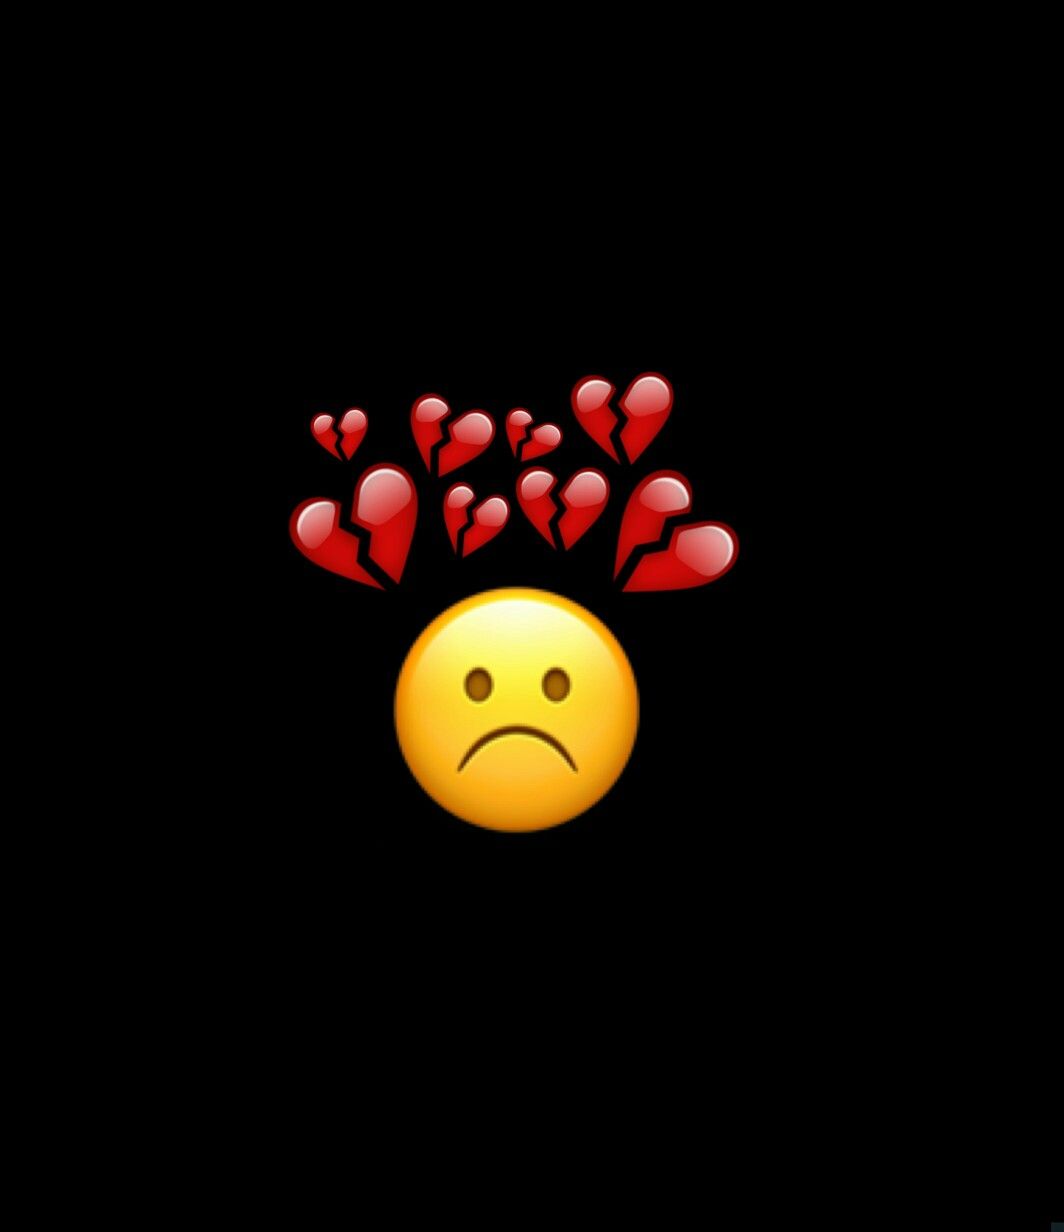 Broken heart.wkwkwkw. Cute emoji wallpaper, Emoji wallpaper, Aesthetic iphone wallpaper